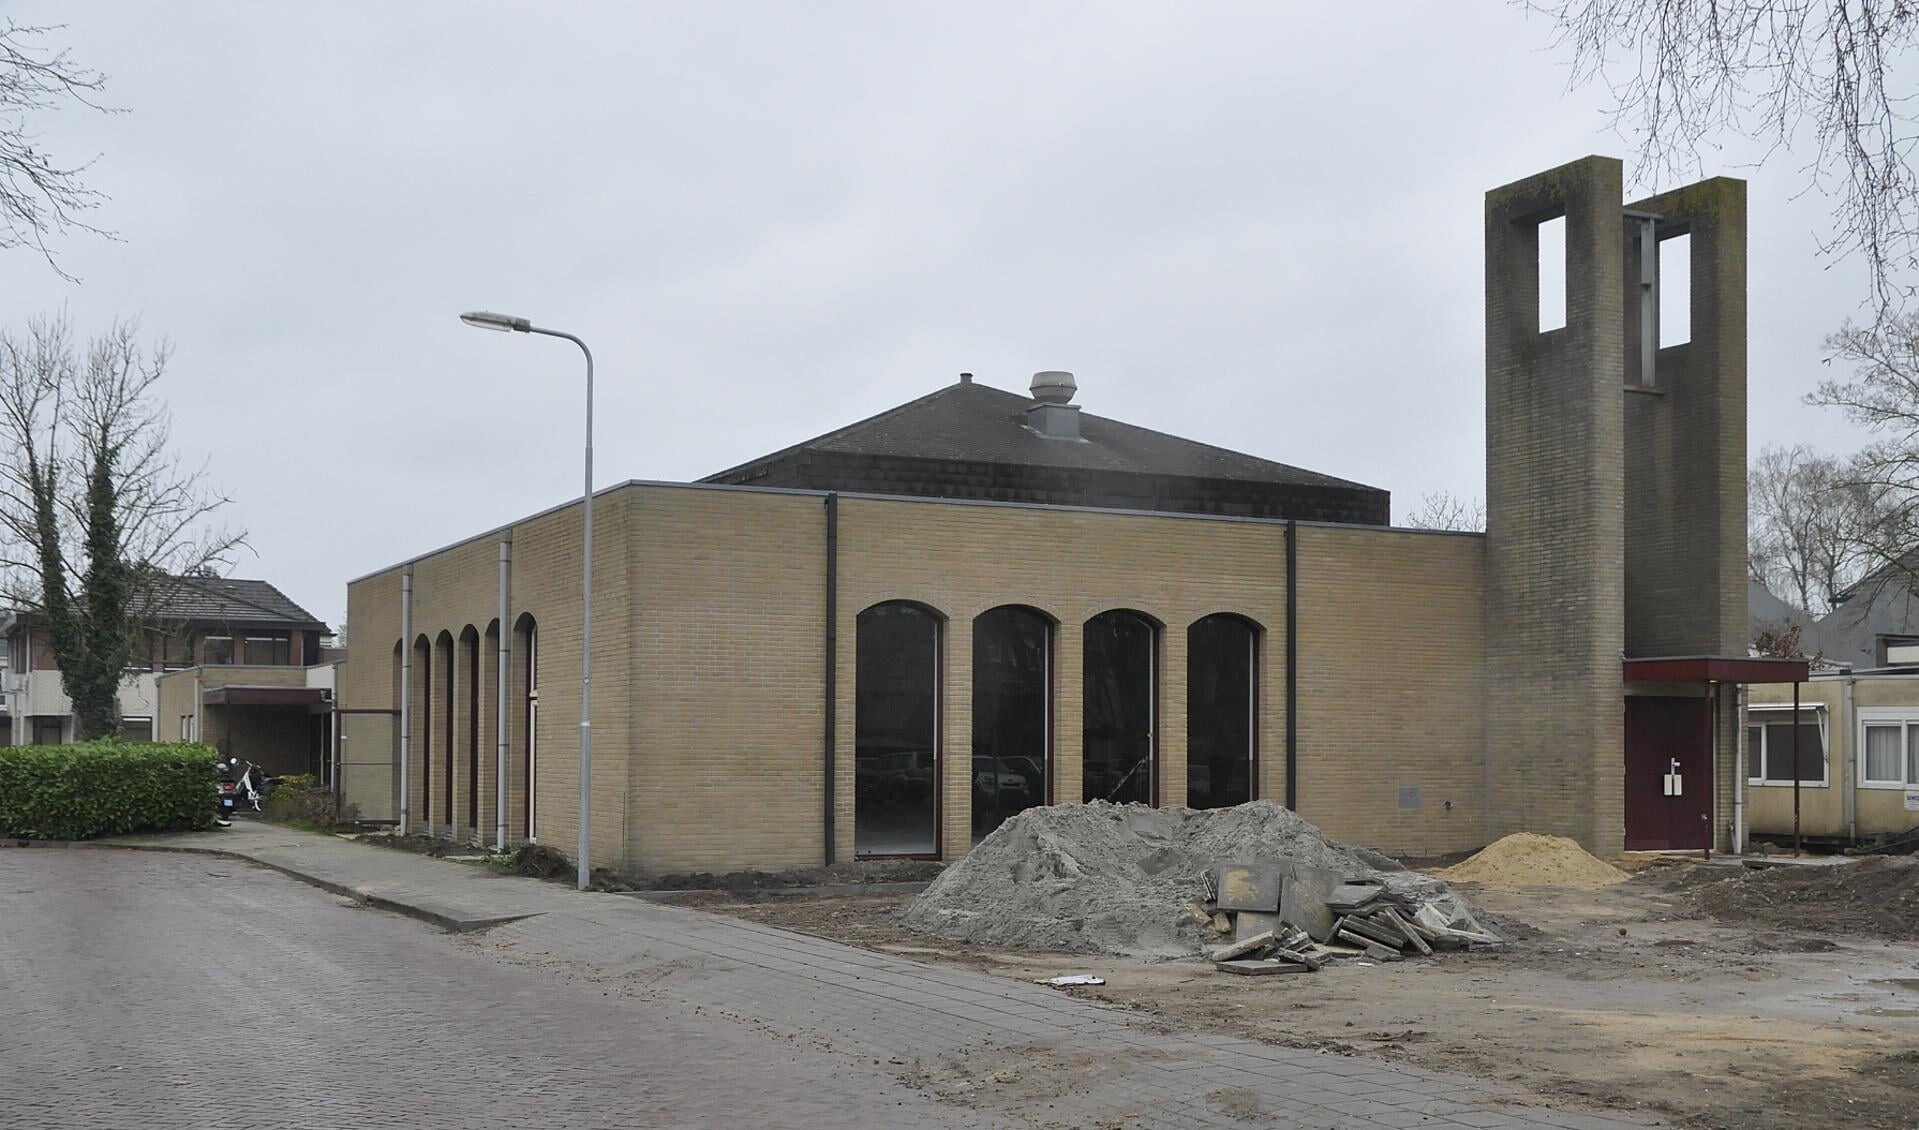 Moskee An-Noer in Barneveld is bijna af. 